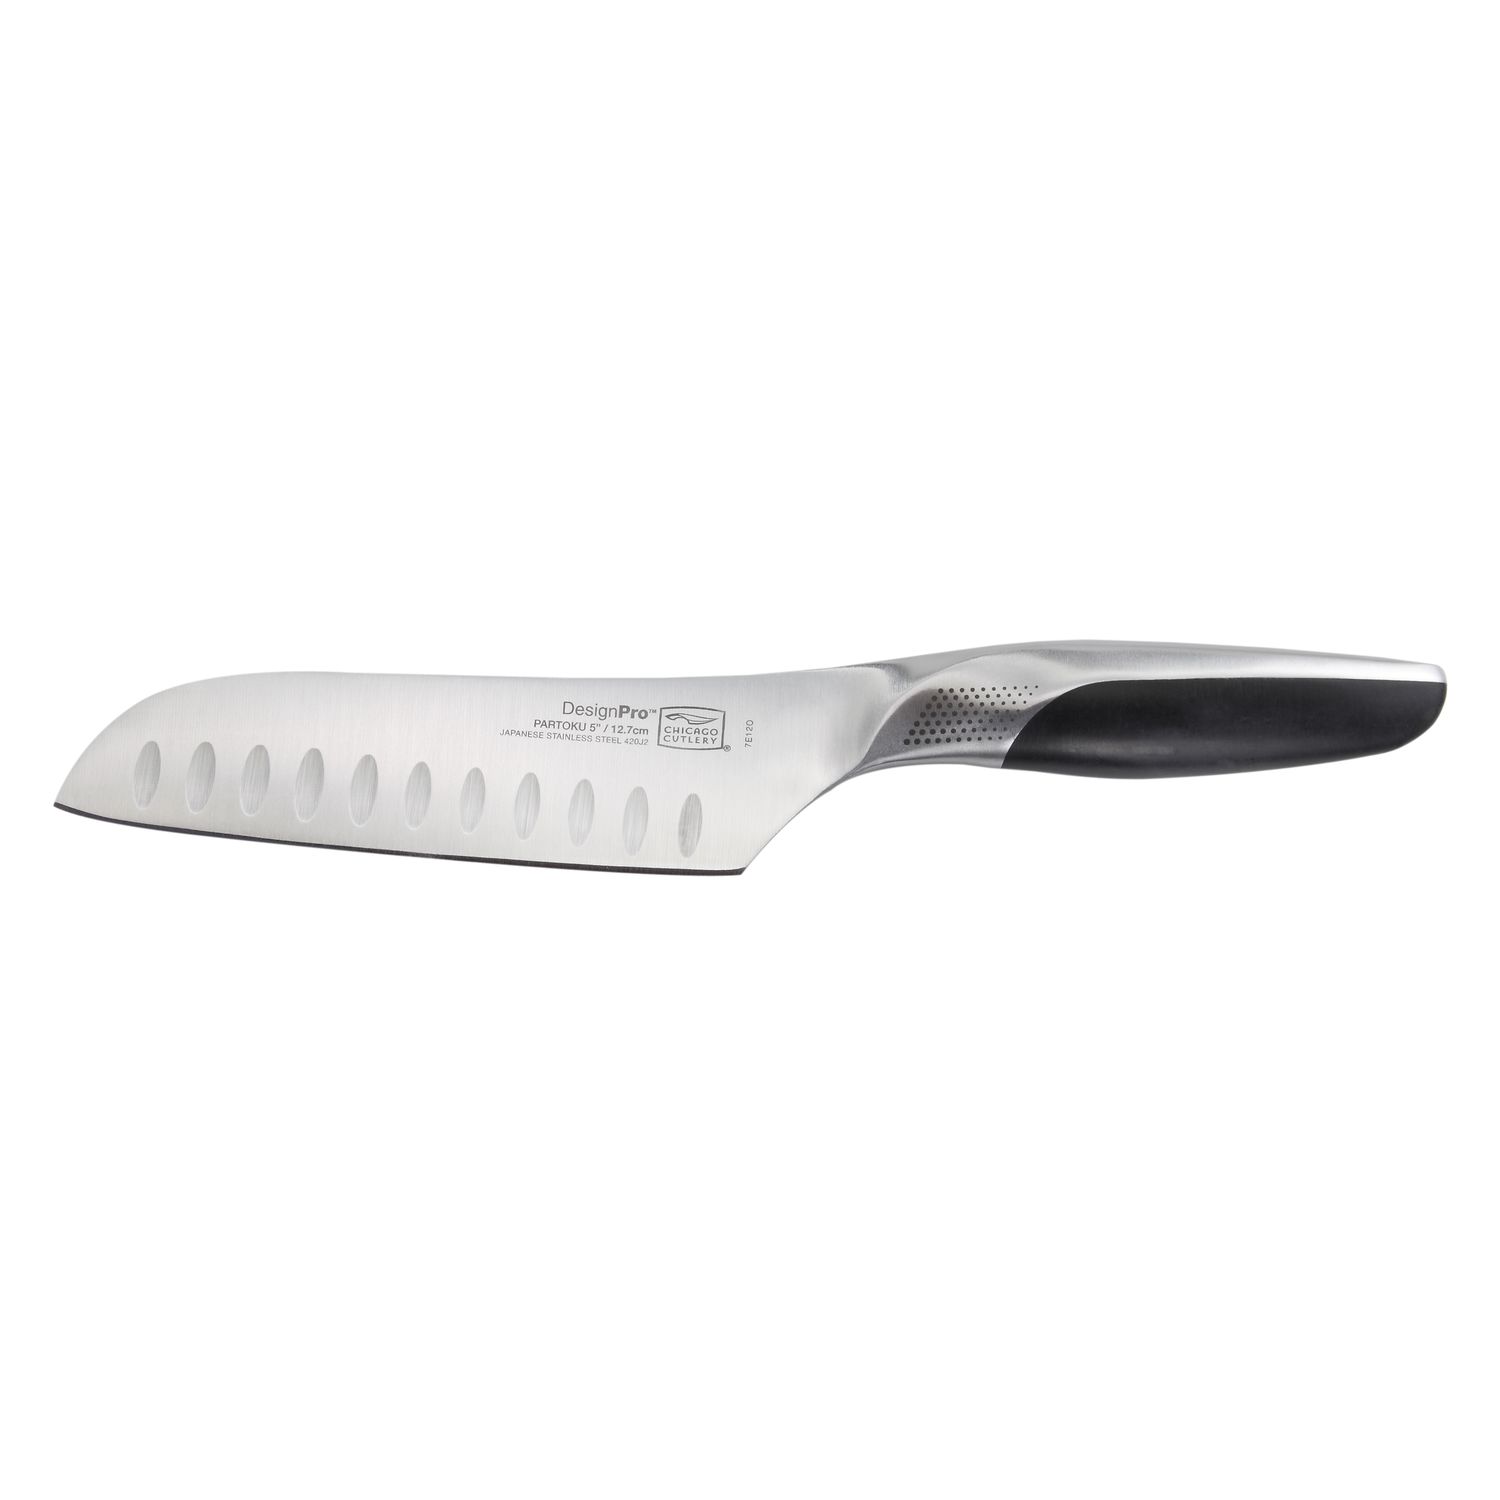 Нож для чистки Chicago Cutlery DesignPro 12,7см нож для чистки 7 5 см julia vysotskaya